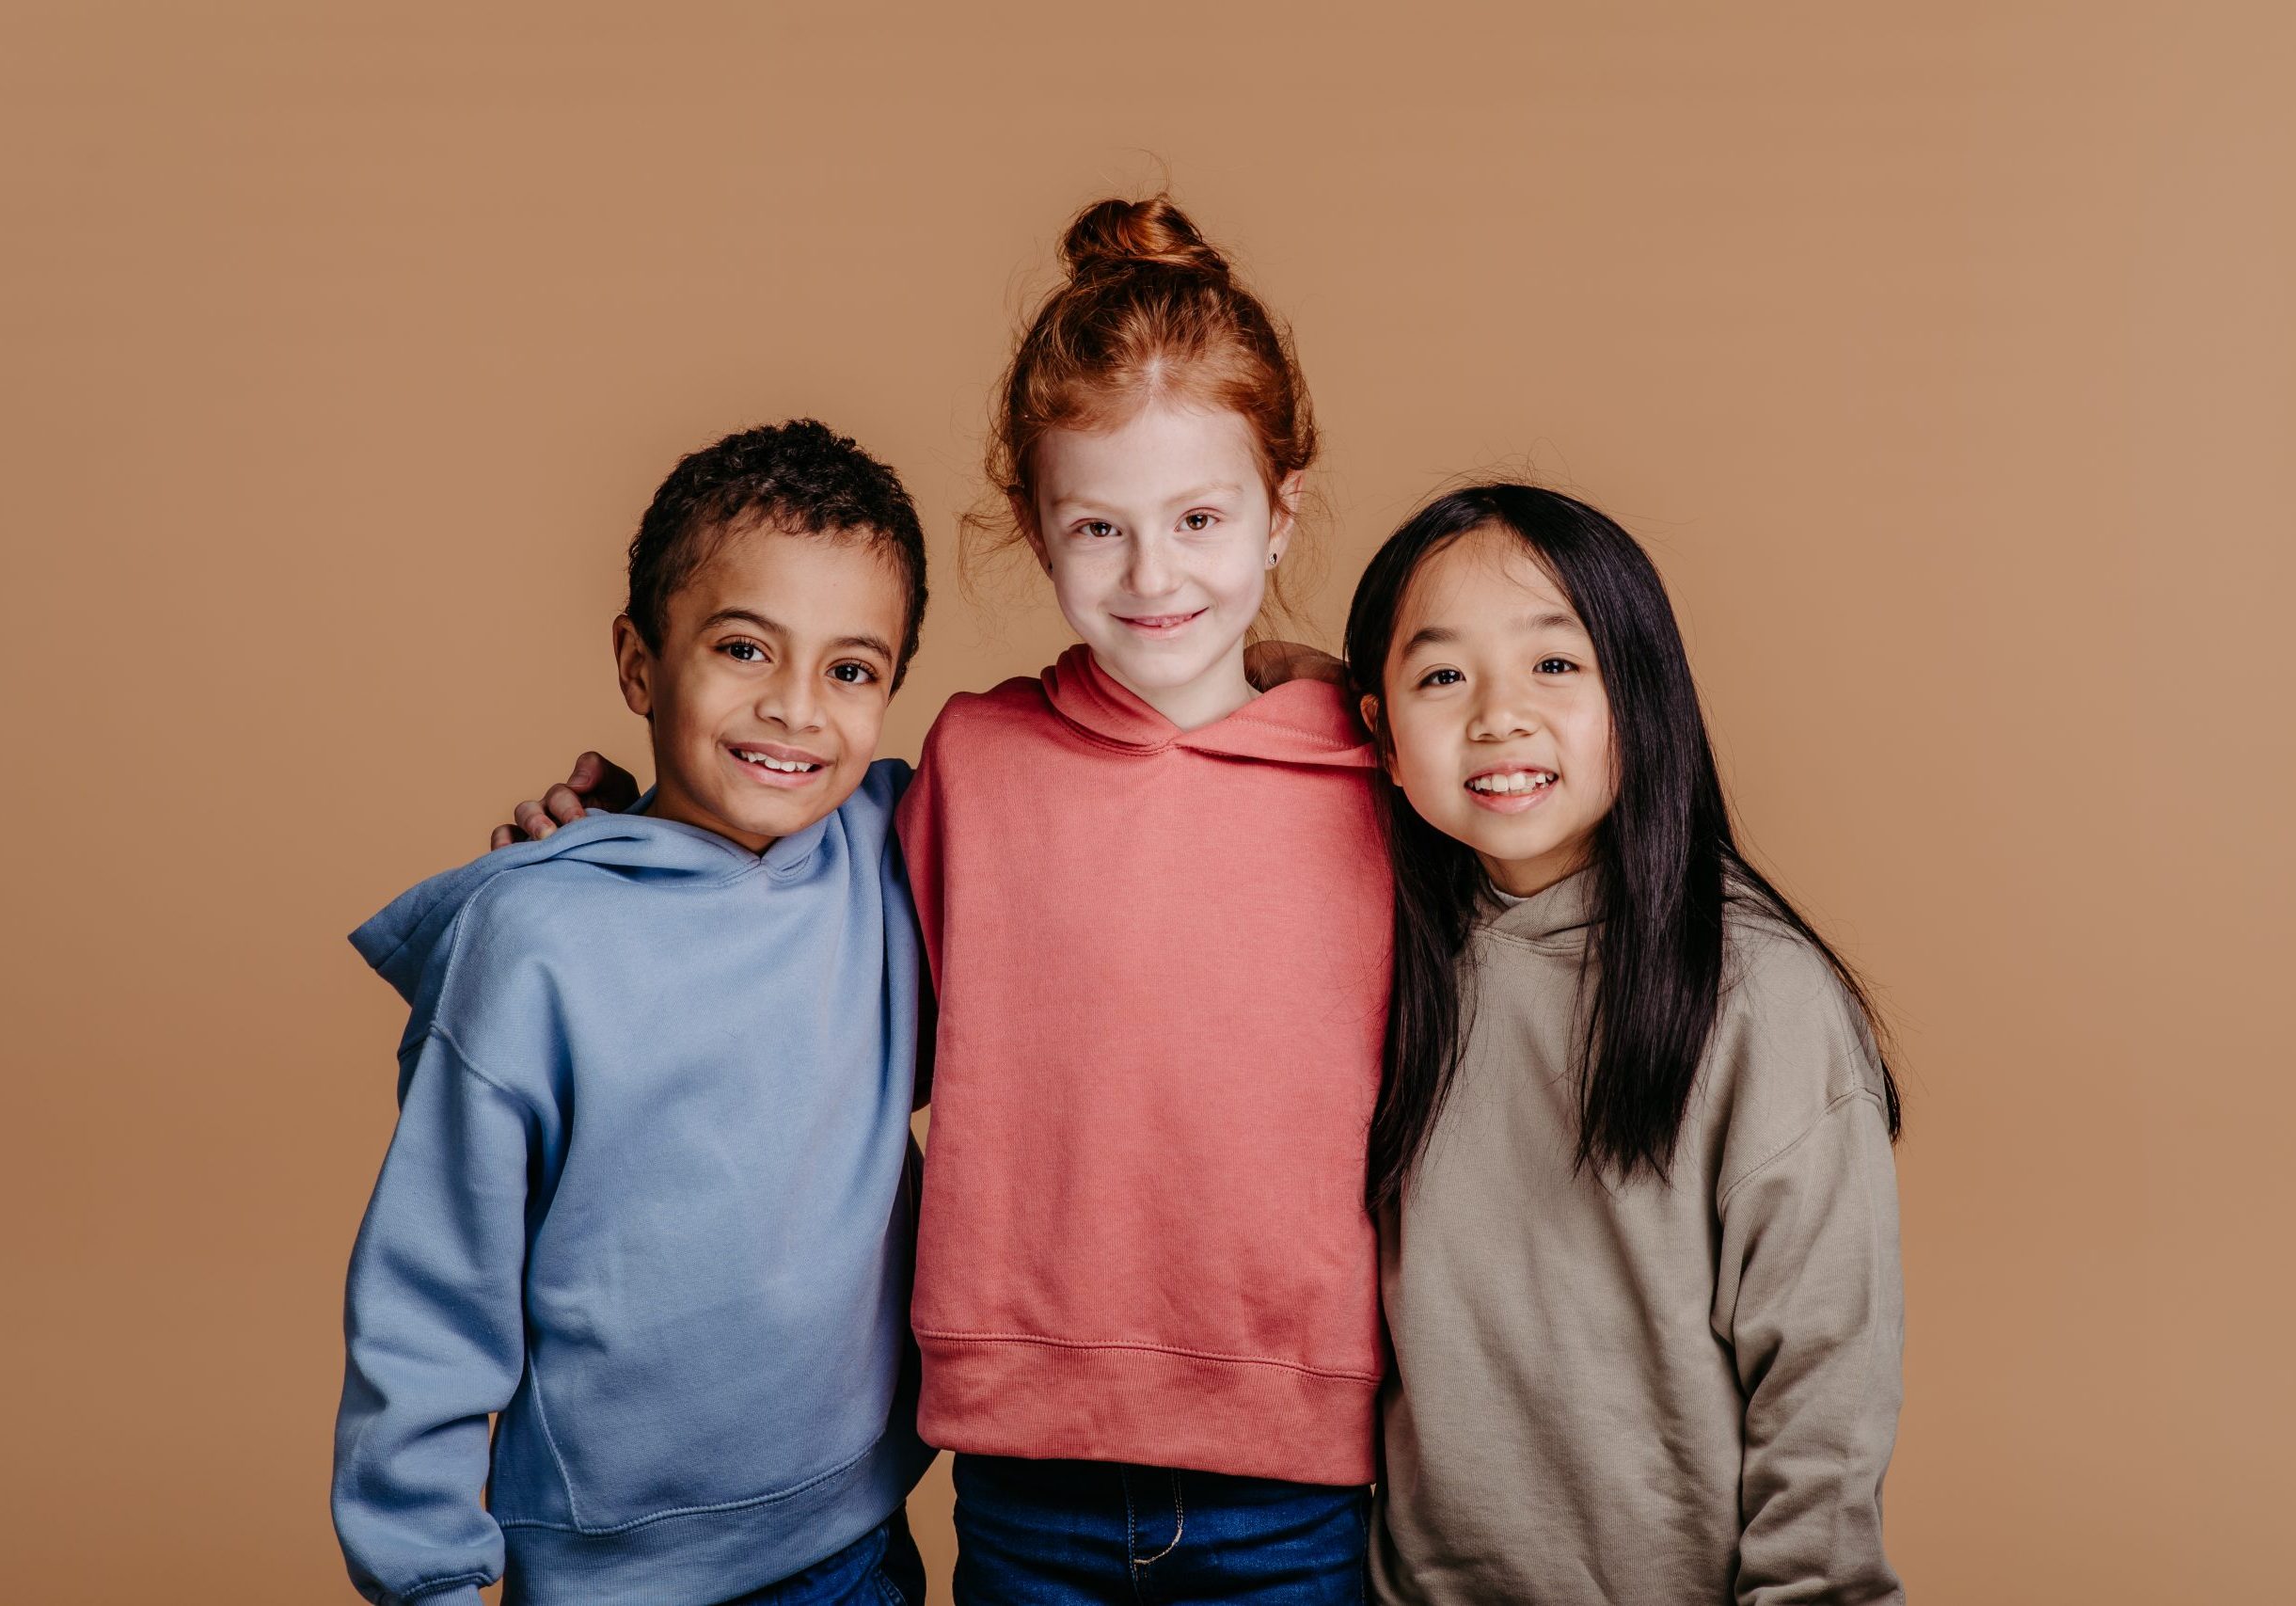 Portrait of three children, studio shoot. Concept of diversity in a friendship.